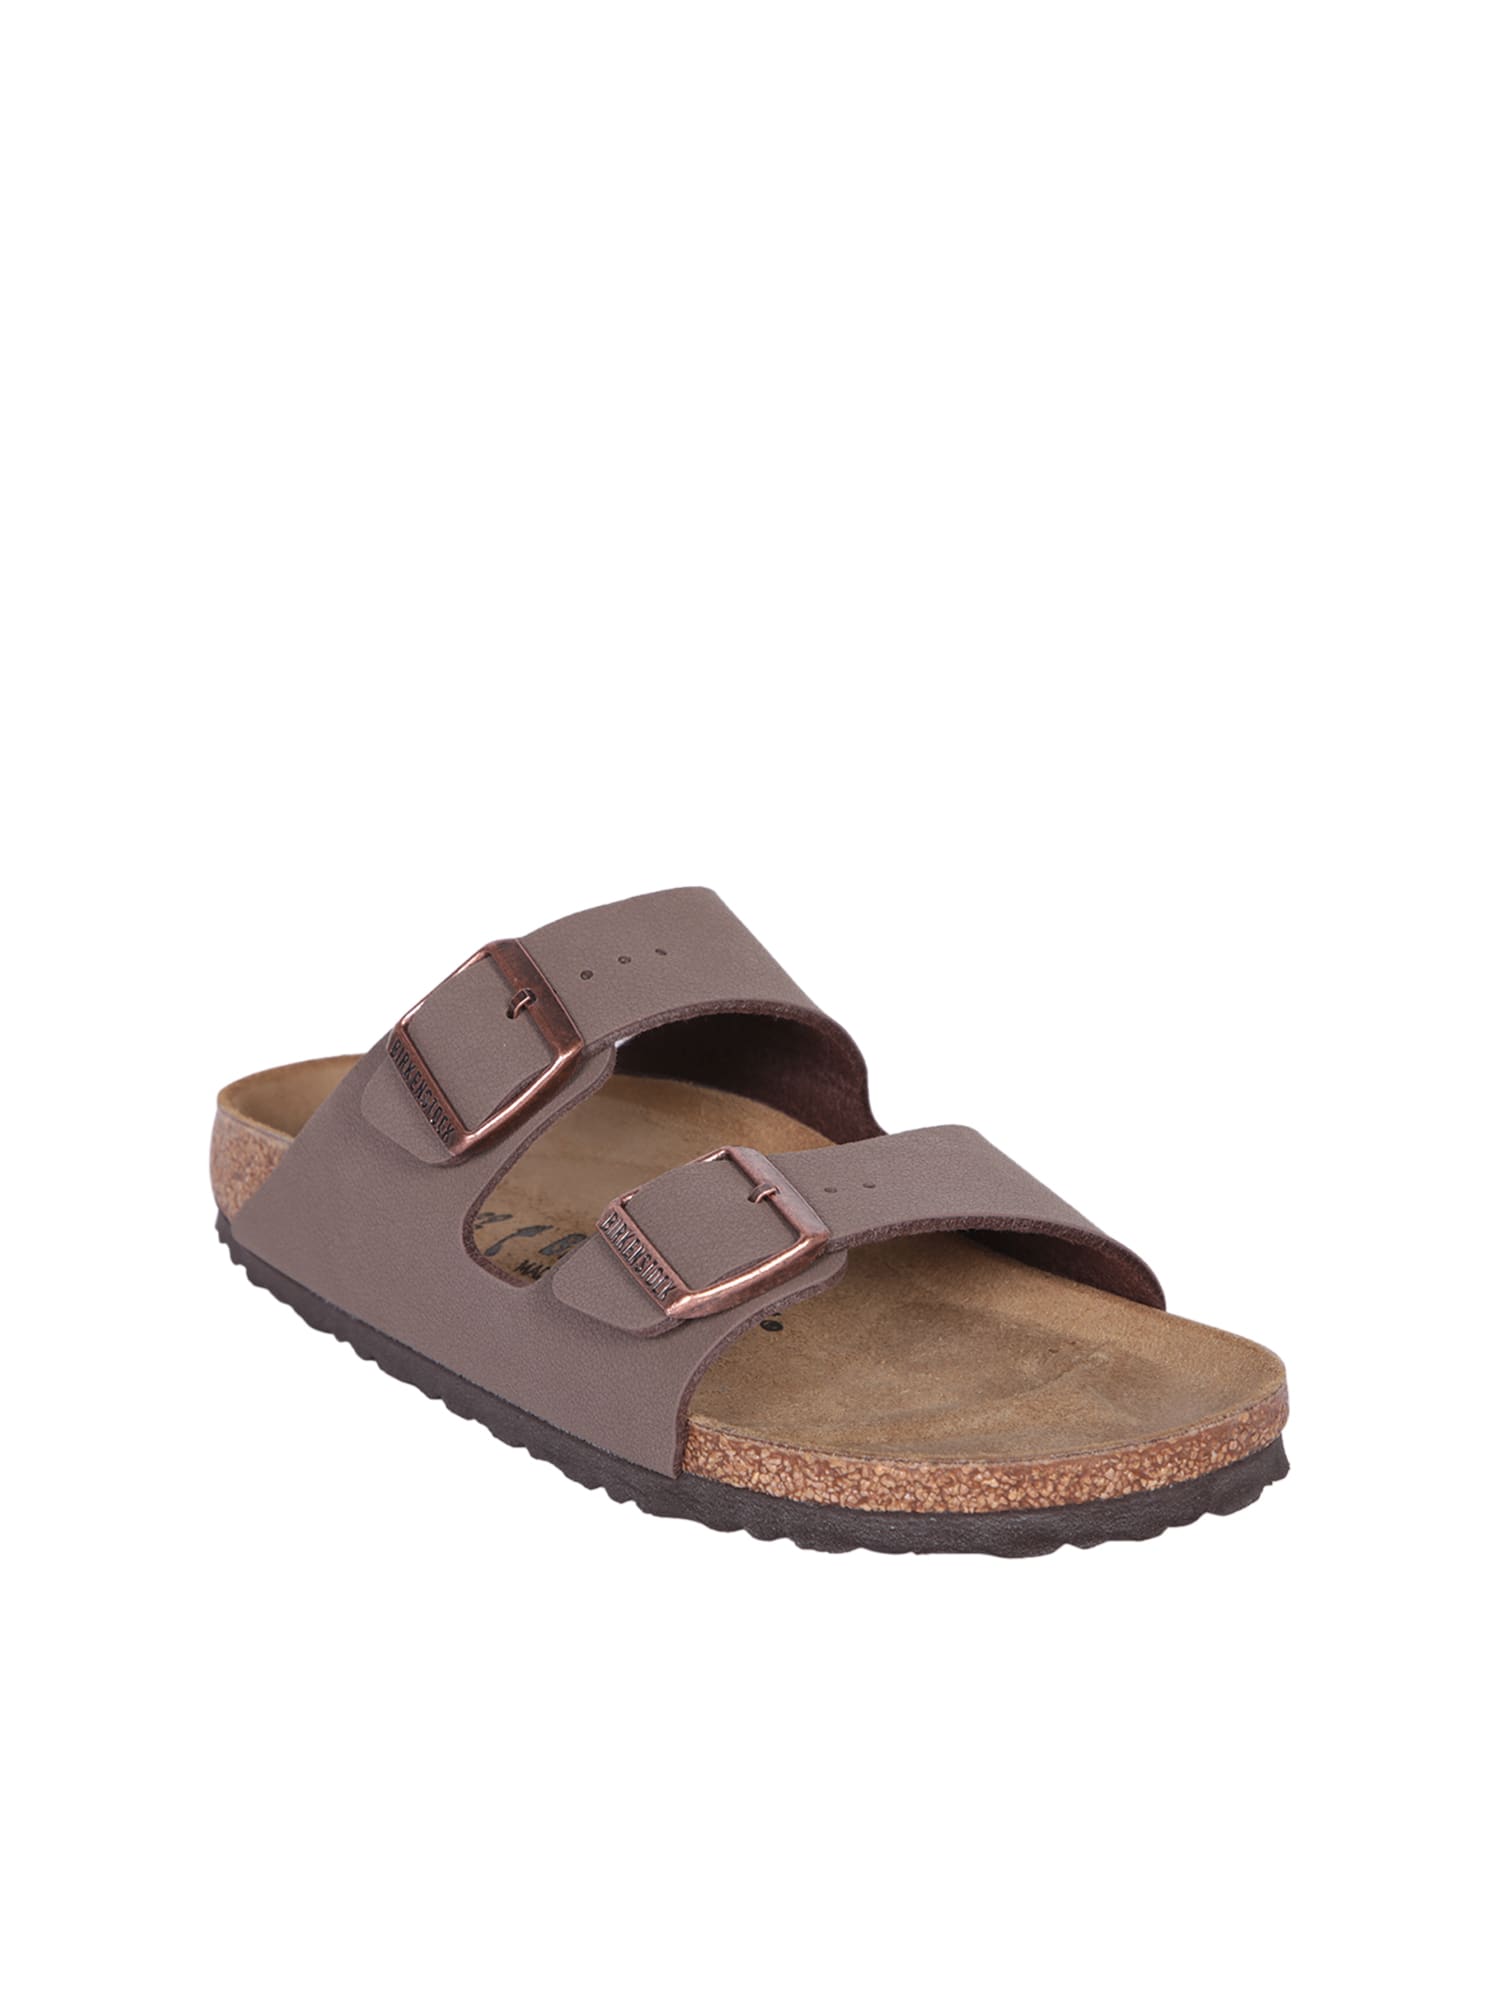 Shop Birkenstock Double-strap Brown Sandals